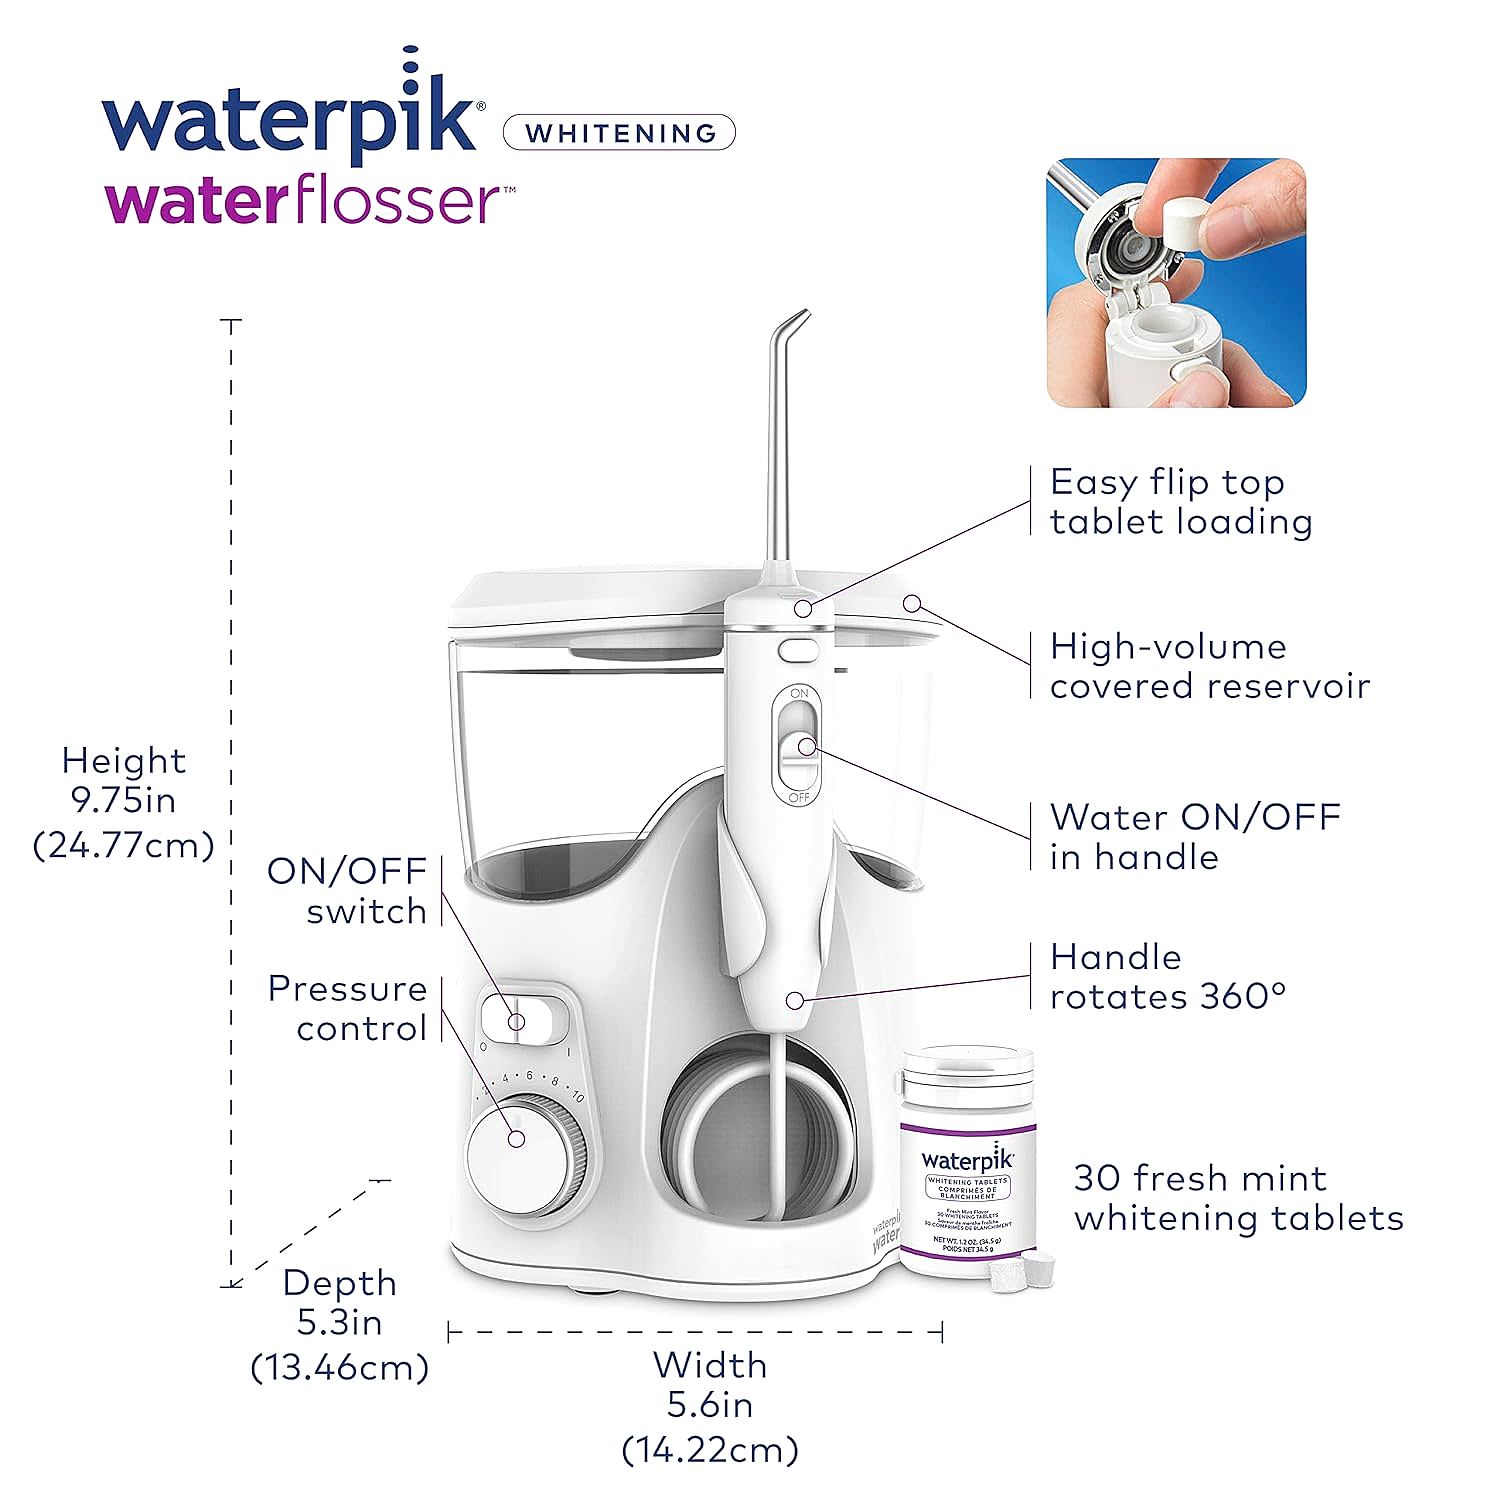  Waterpik WF-06 Whitening Water Flosser   